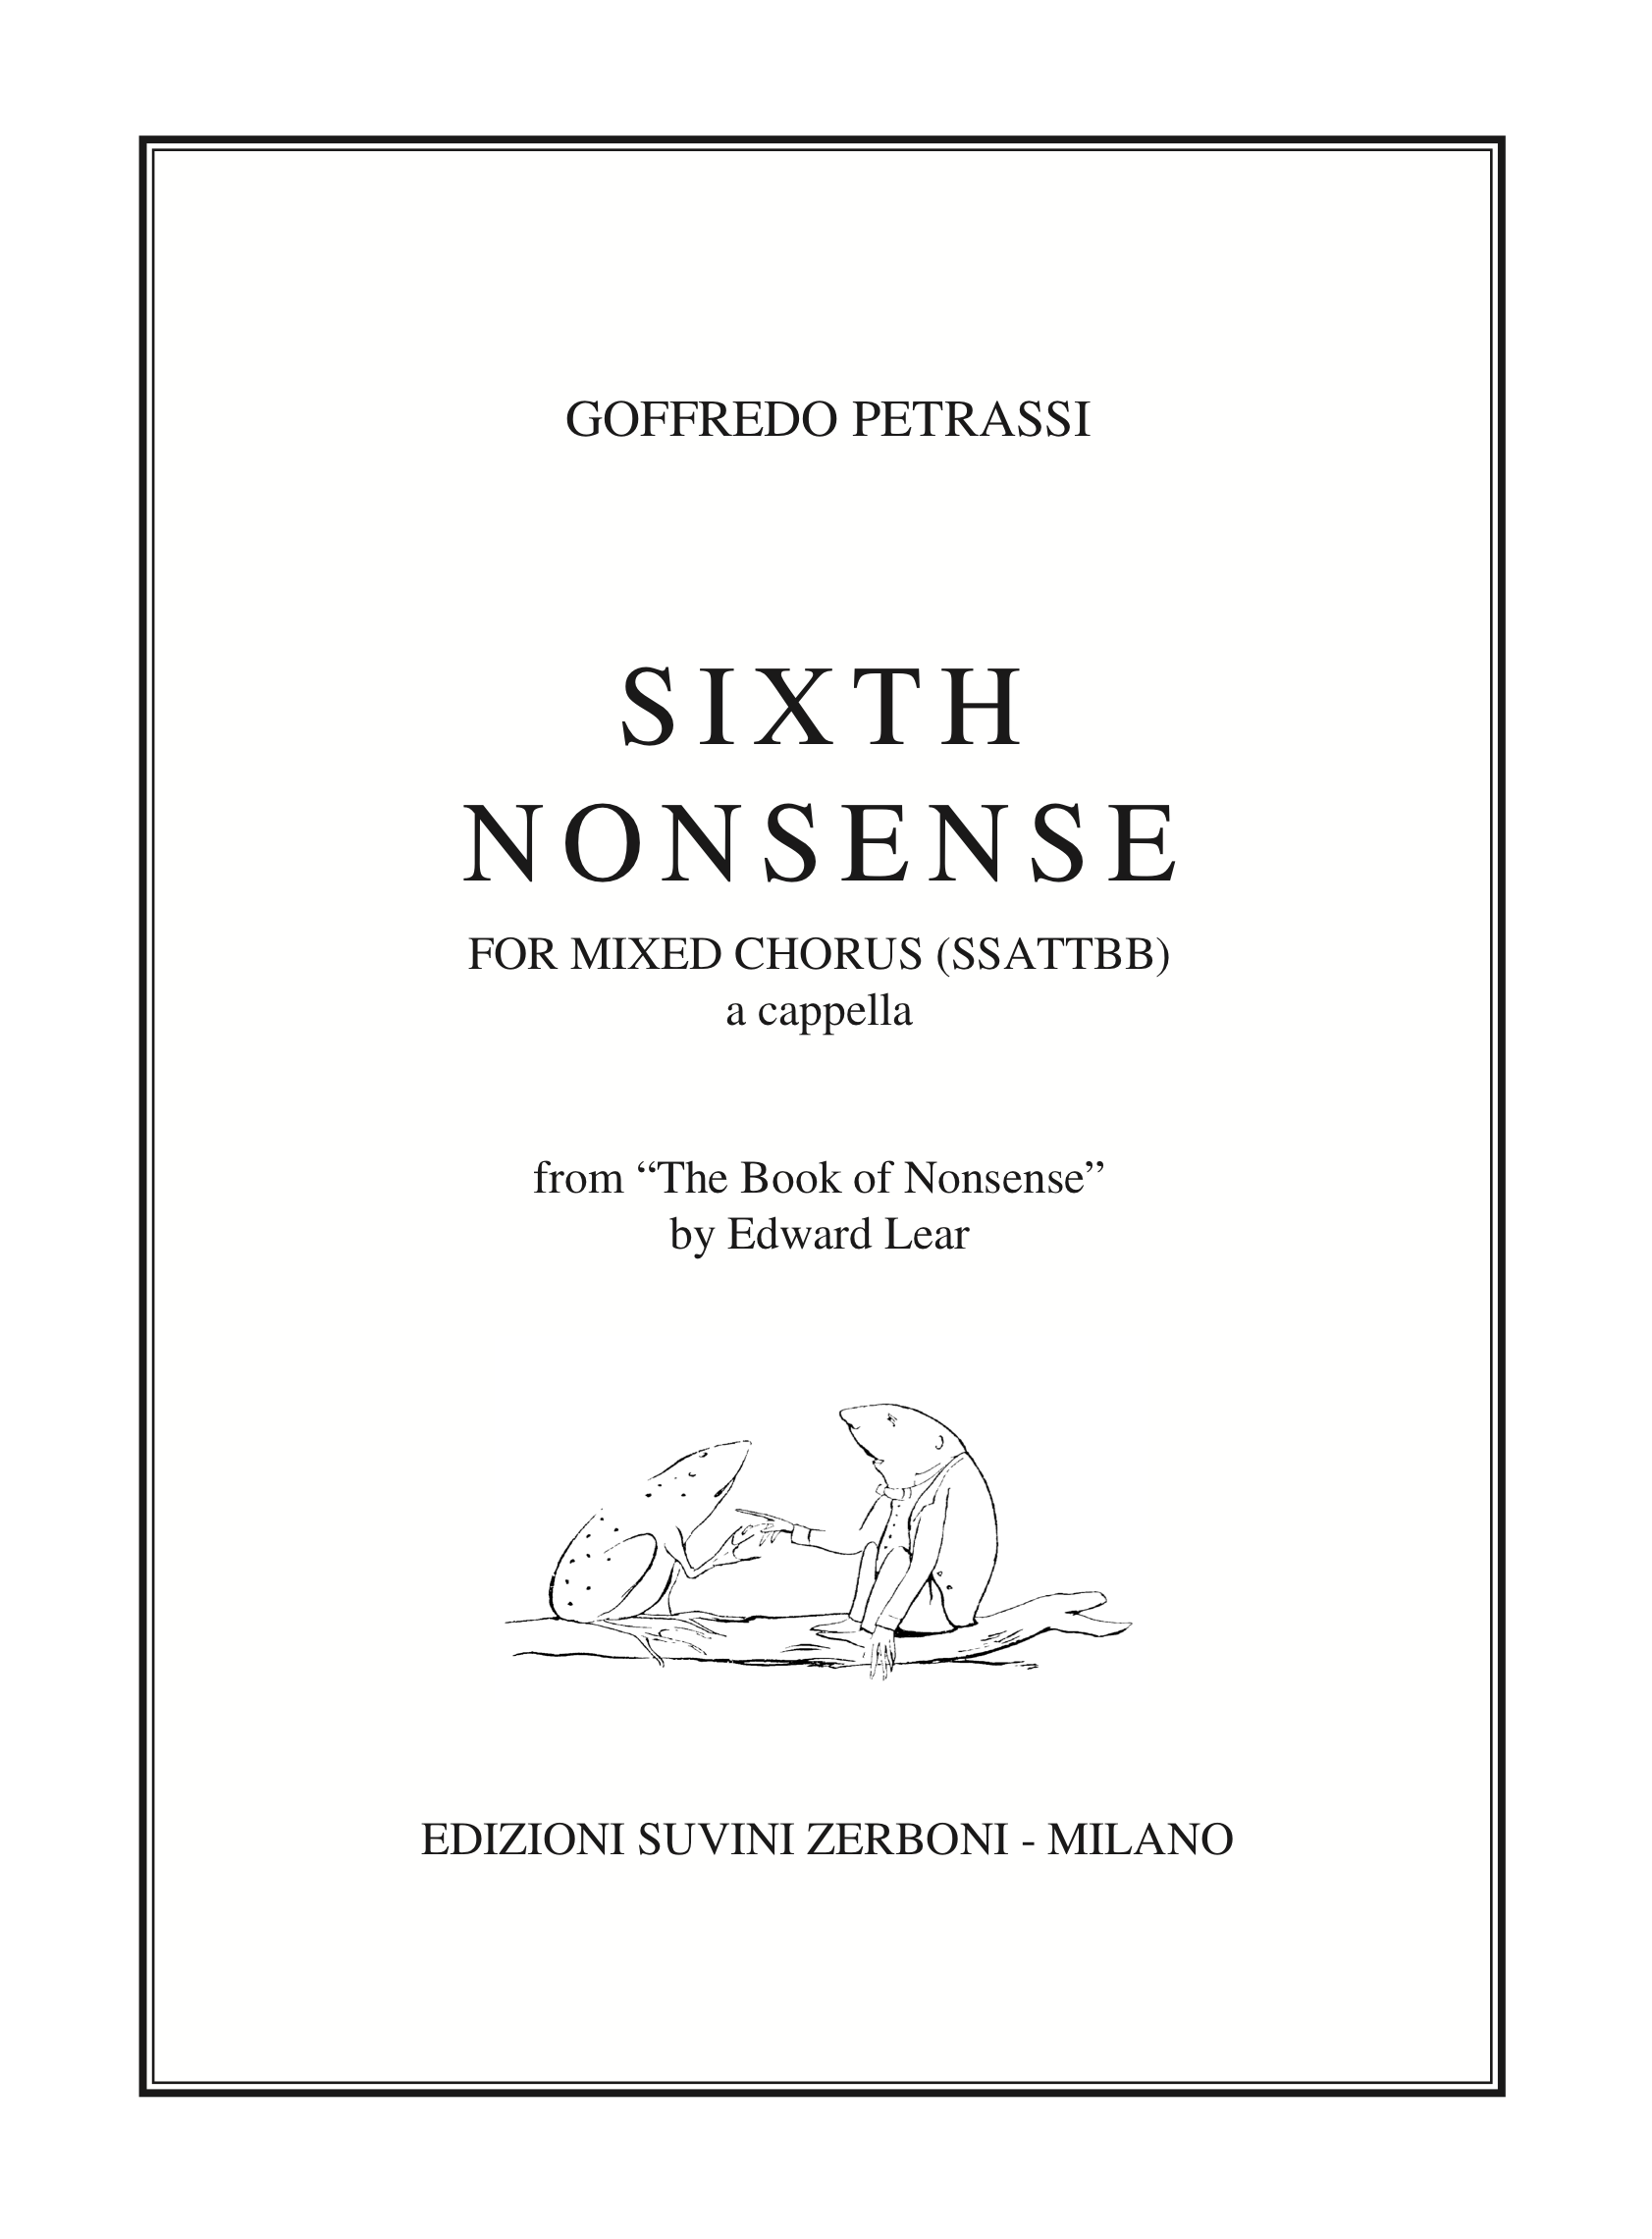 Sixth Nonsense_Petrassi 1